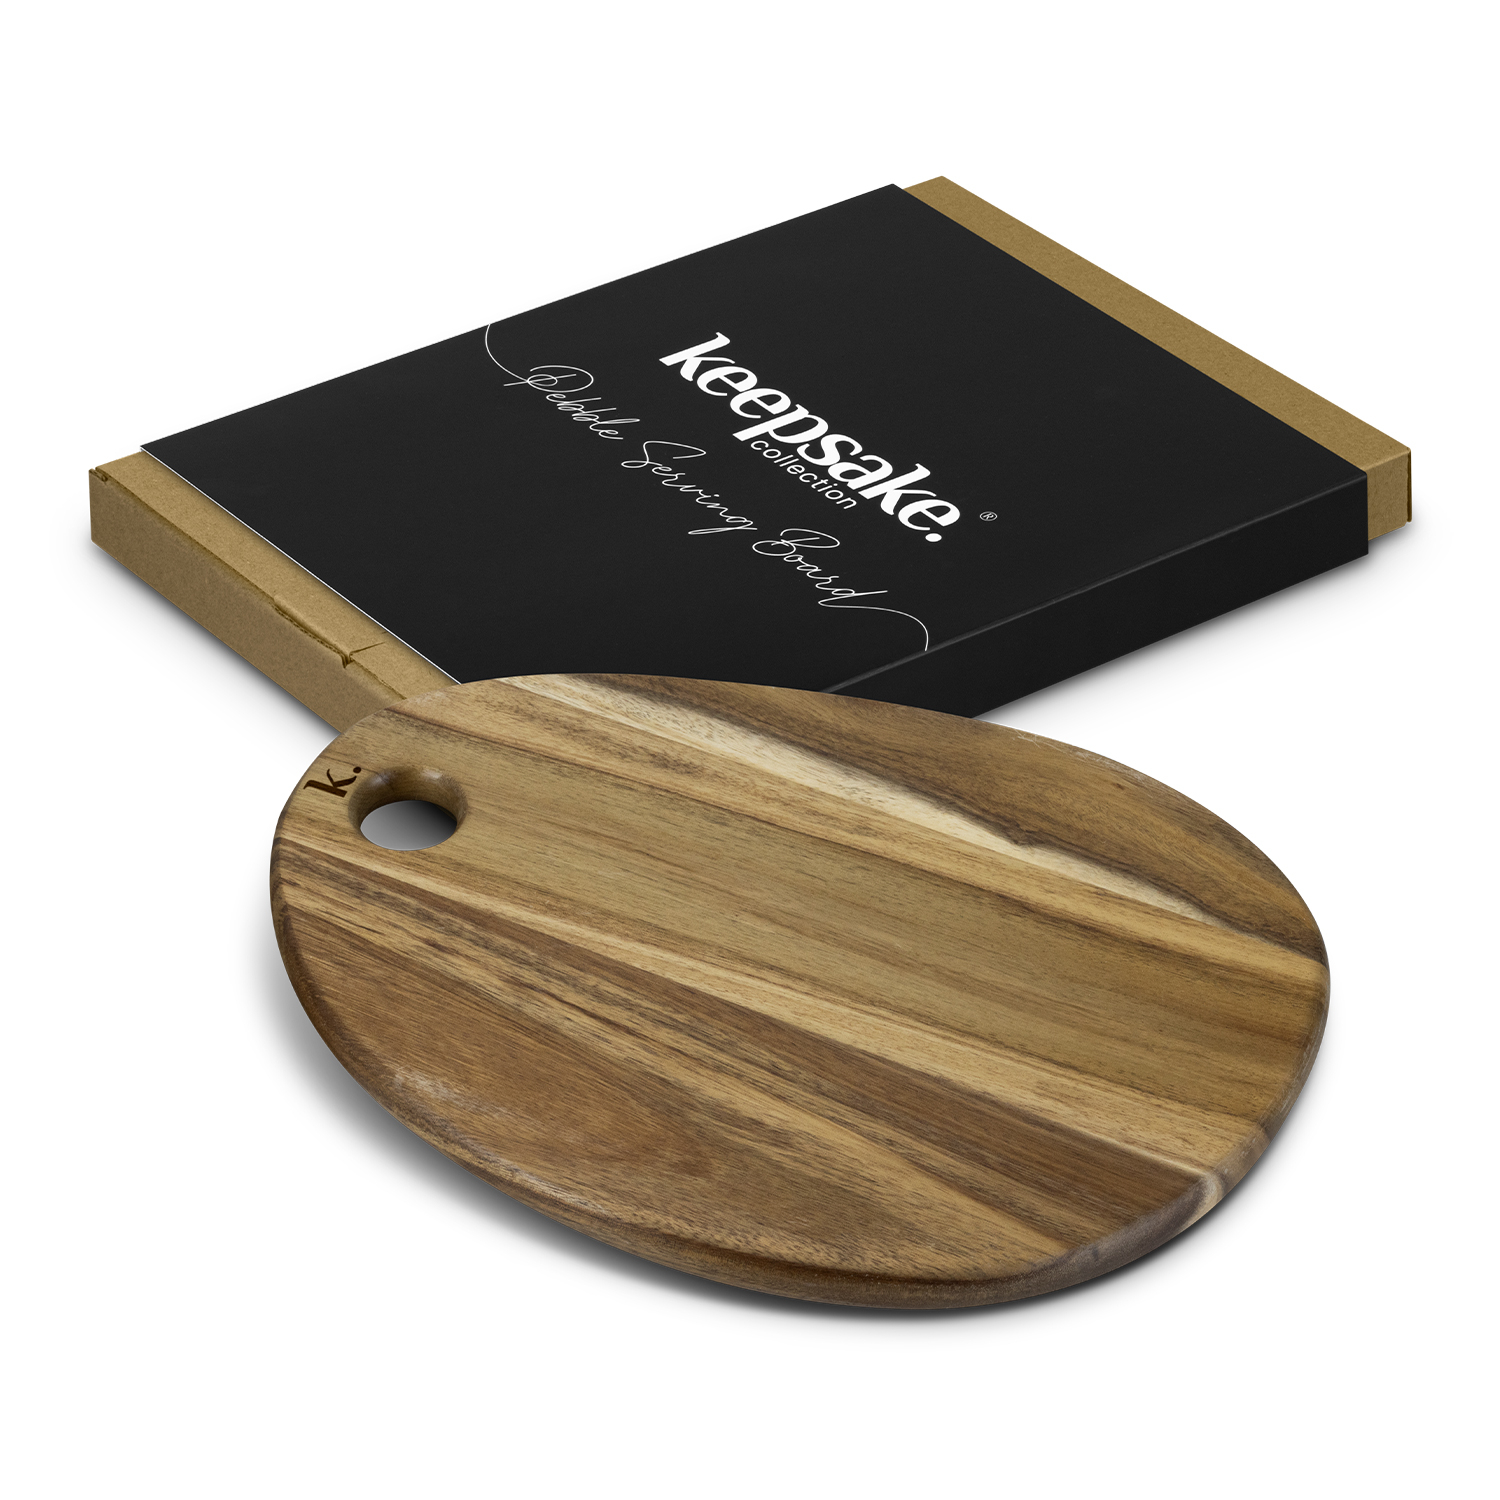 Serving Board - Keepsake Pebble10 Piece - Laser Engraved 60x30mm